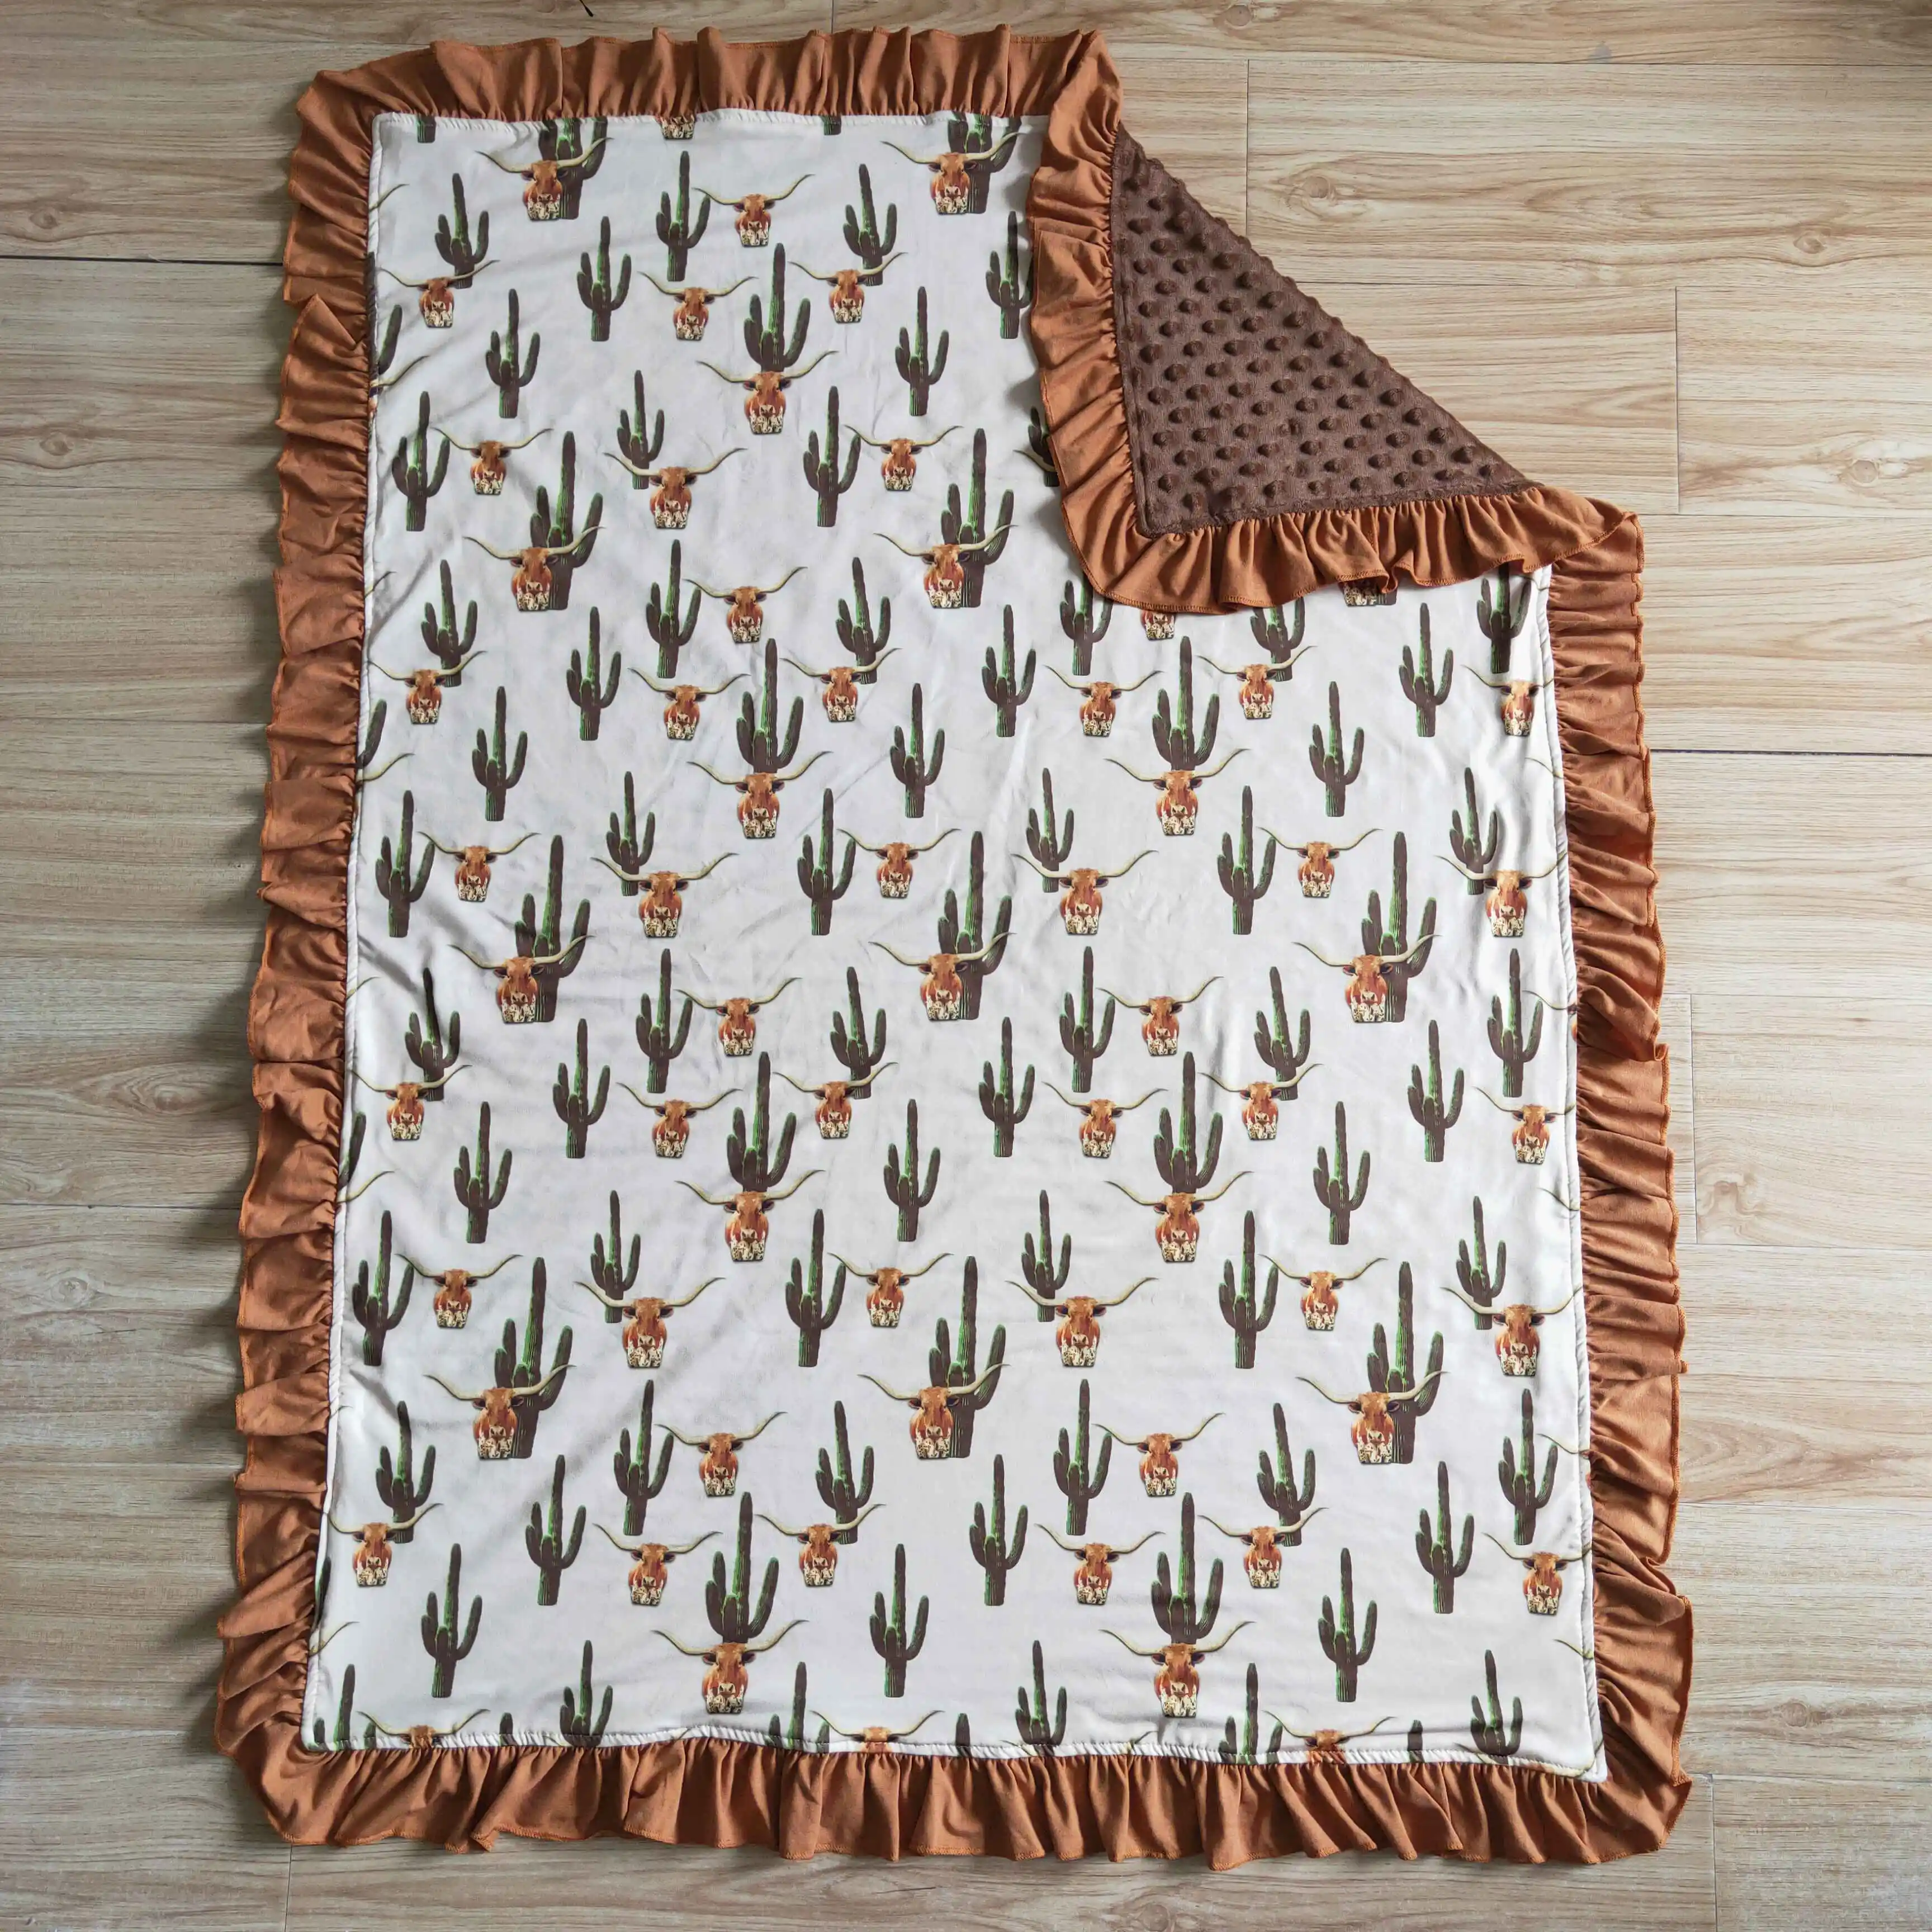 2022 Wholesale Baby Blankets Brown Ruffles Heifer Cactus Print Boutique Girls Kids Western Design 29*43 inches Blanket